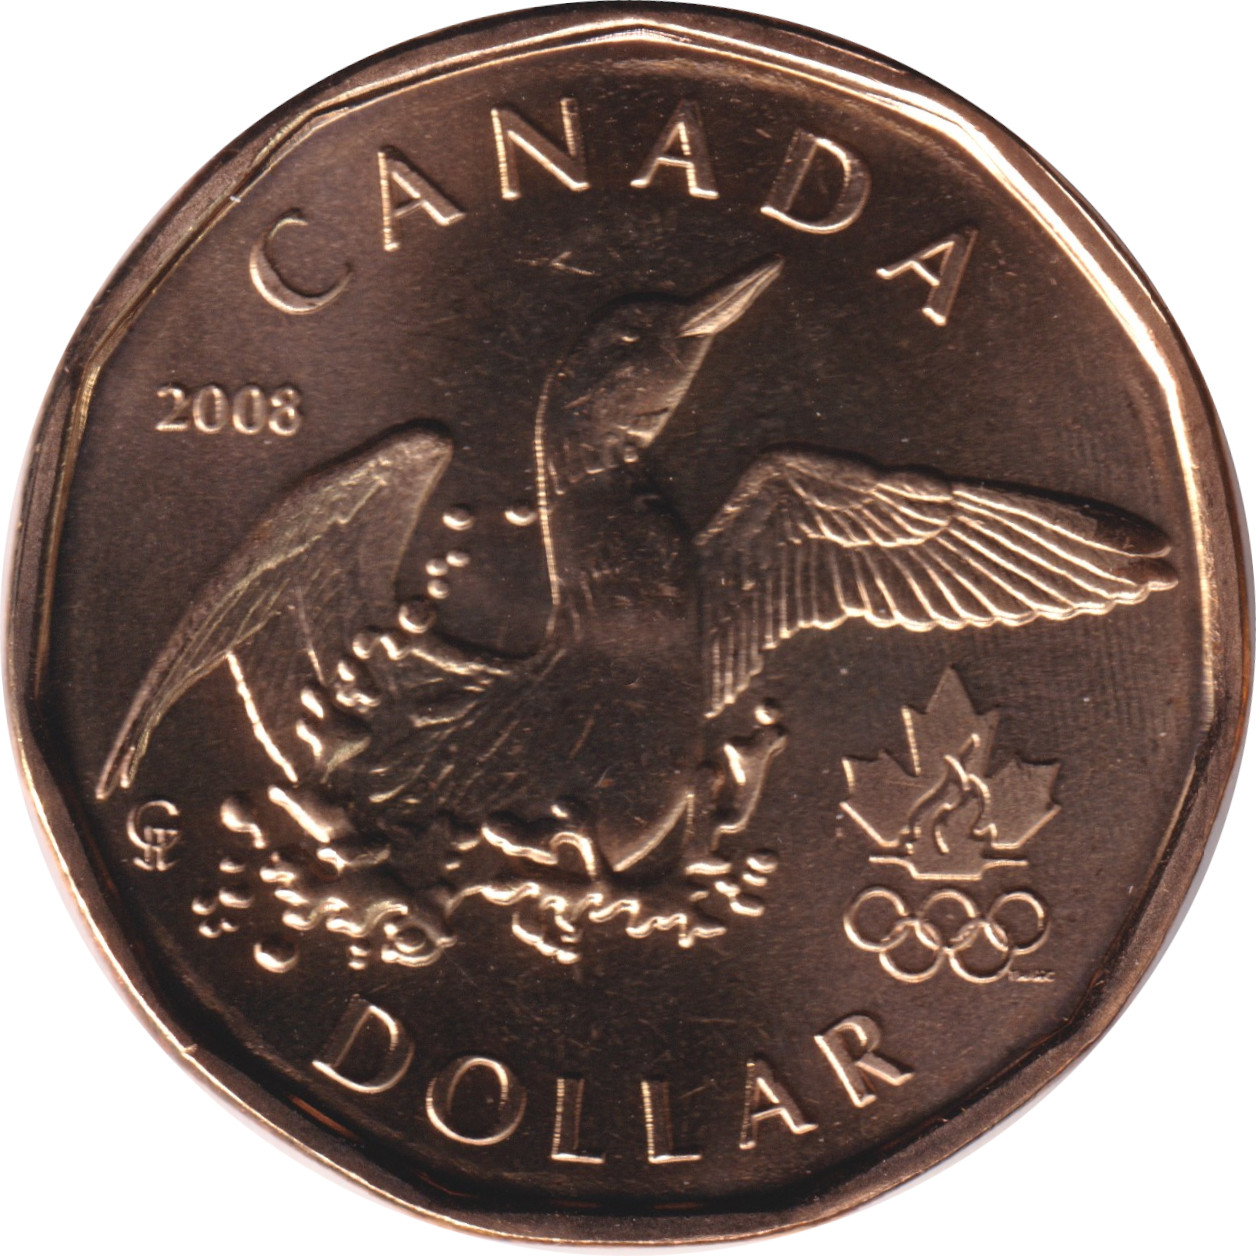 1 dollar - Huard olympique 2008